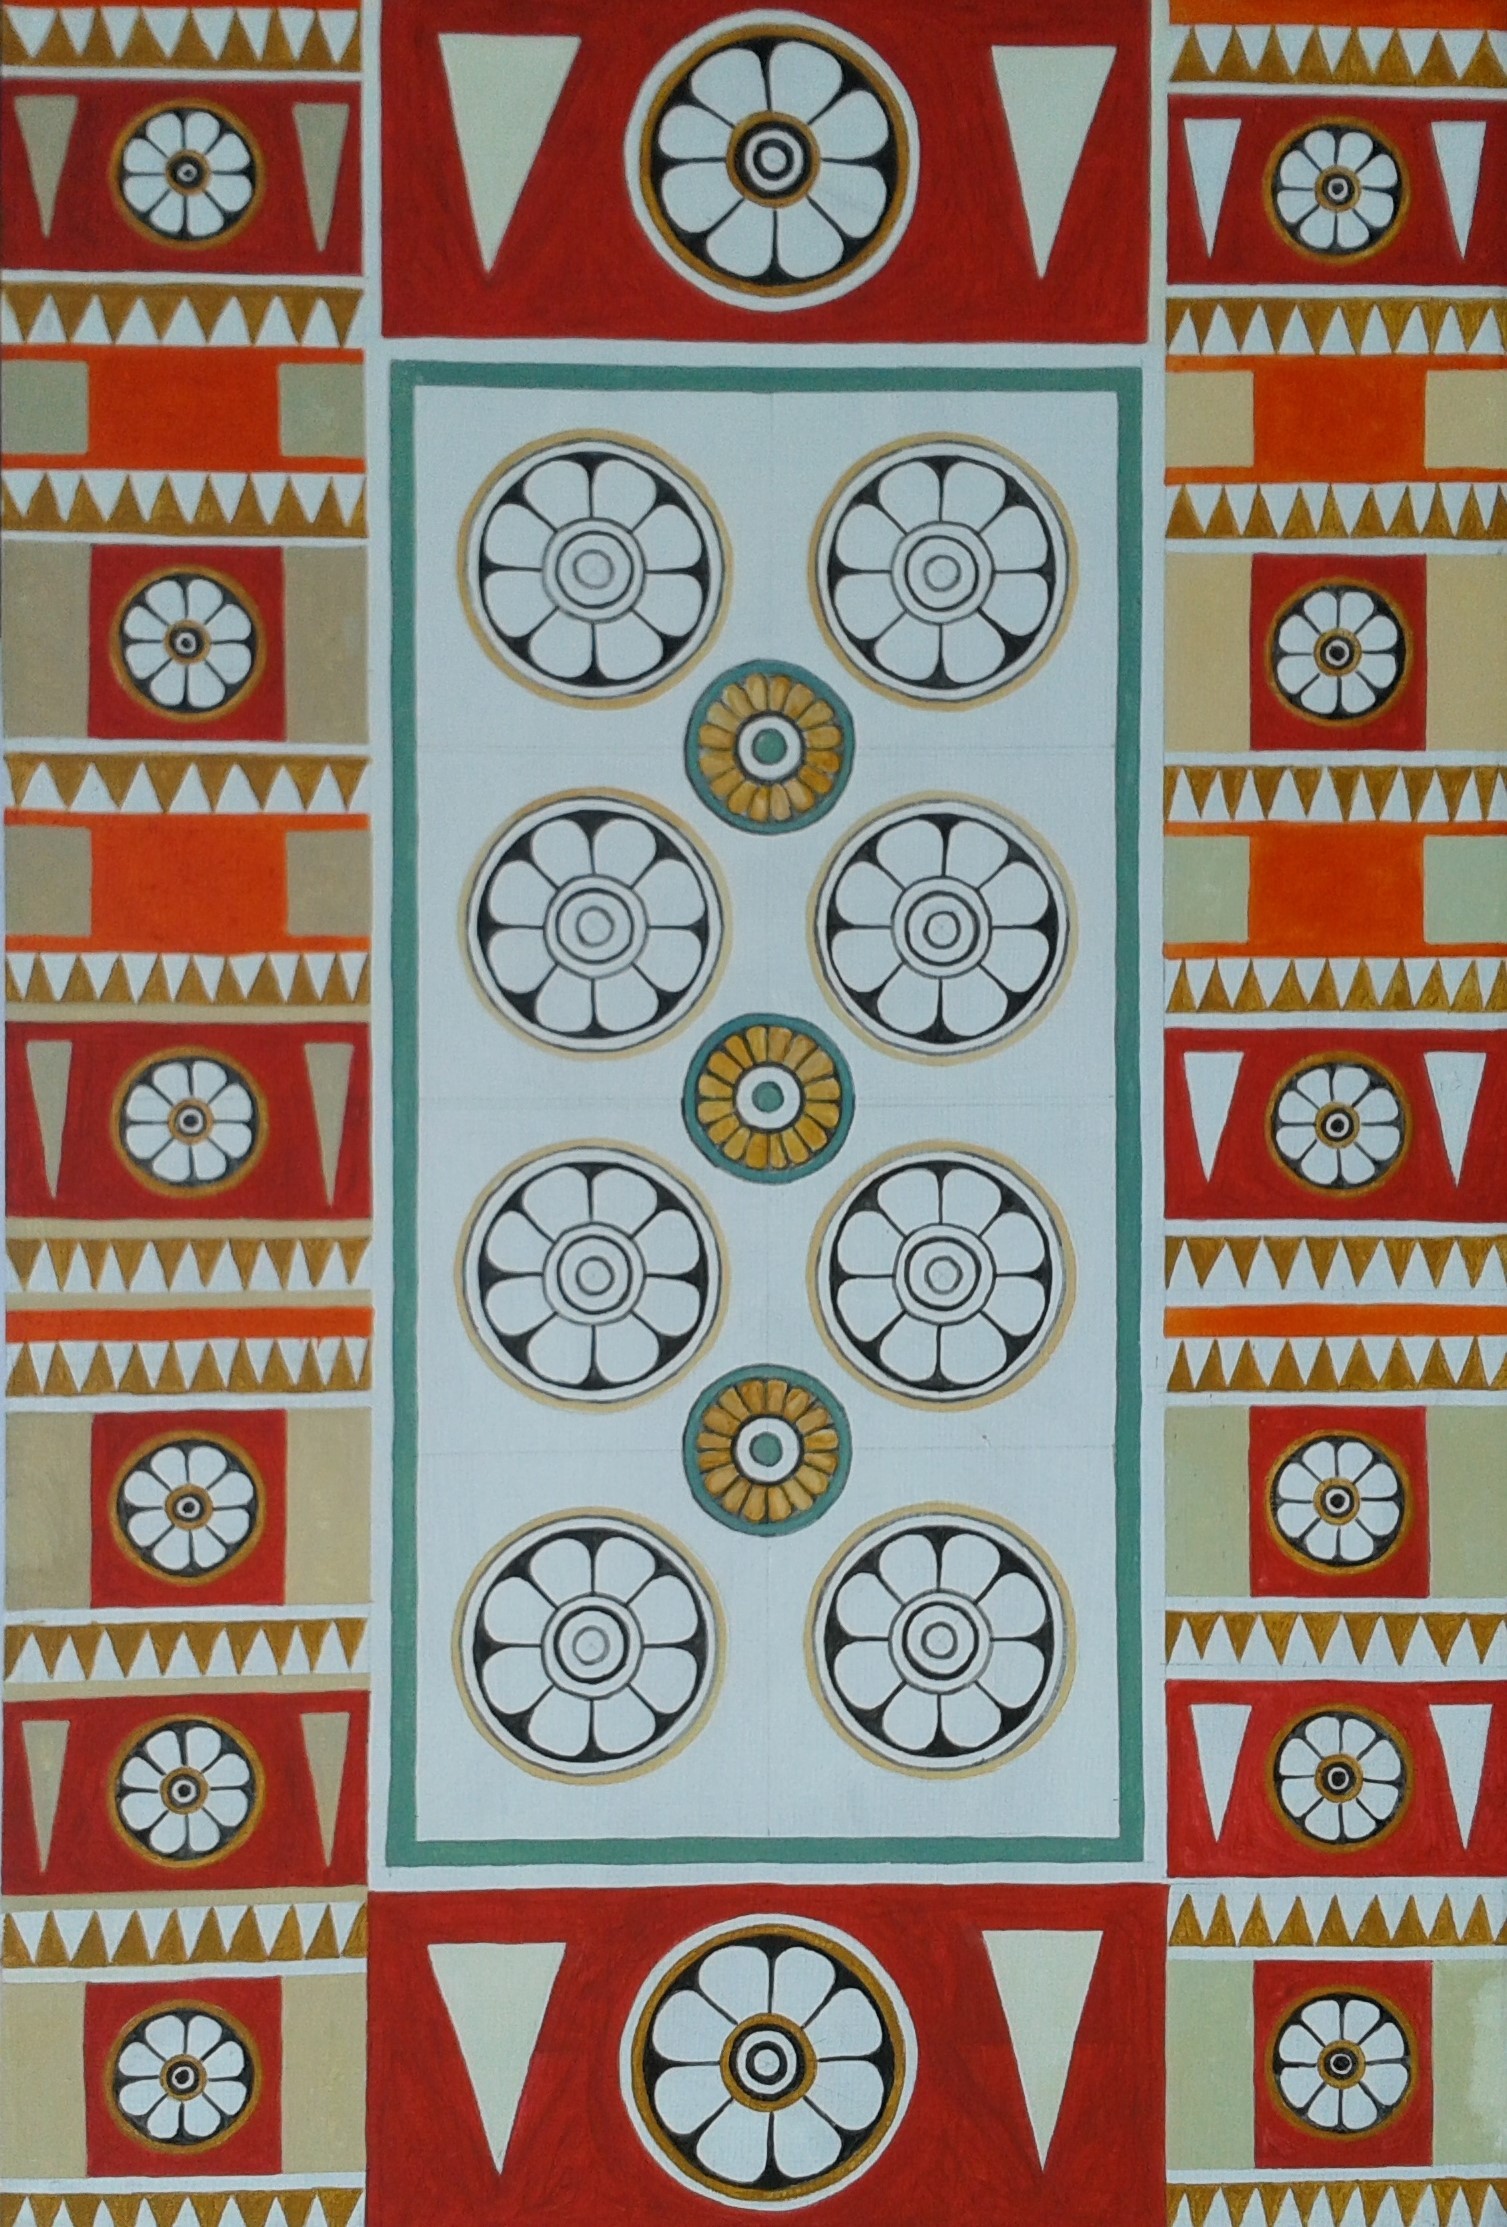 Color pattern approved by the Bu by Wasantha Namaskara